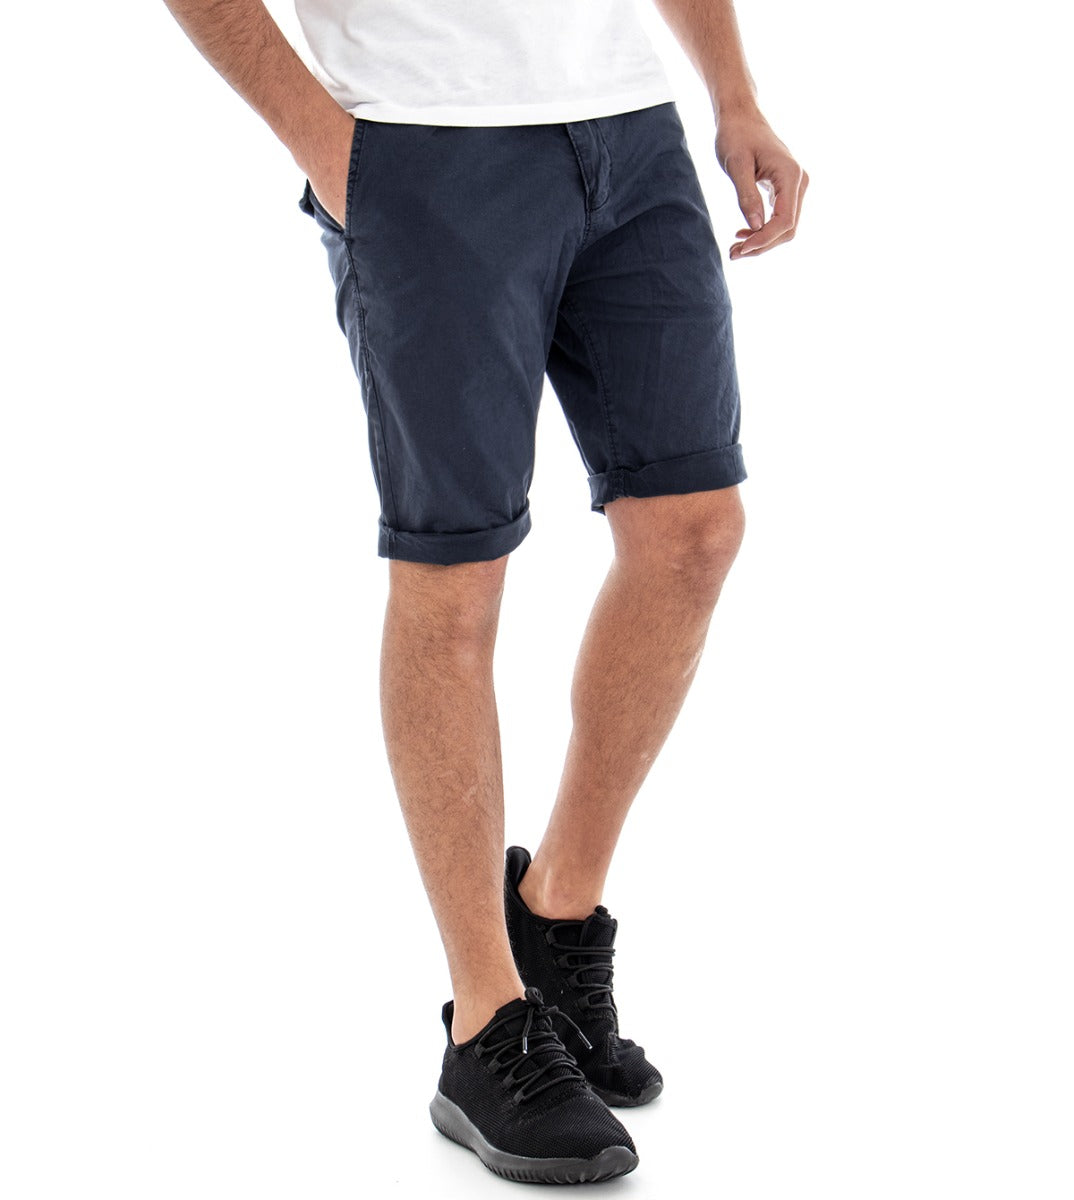 Bermuda Short Men's Shorts America Pocket Solid Color Slim Blue GIOSAL-PC1300A